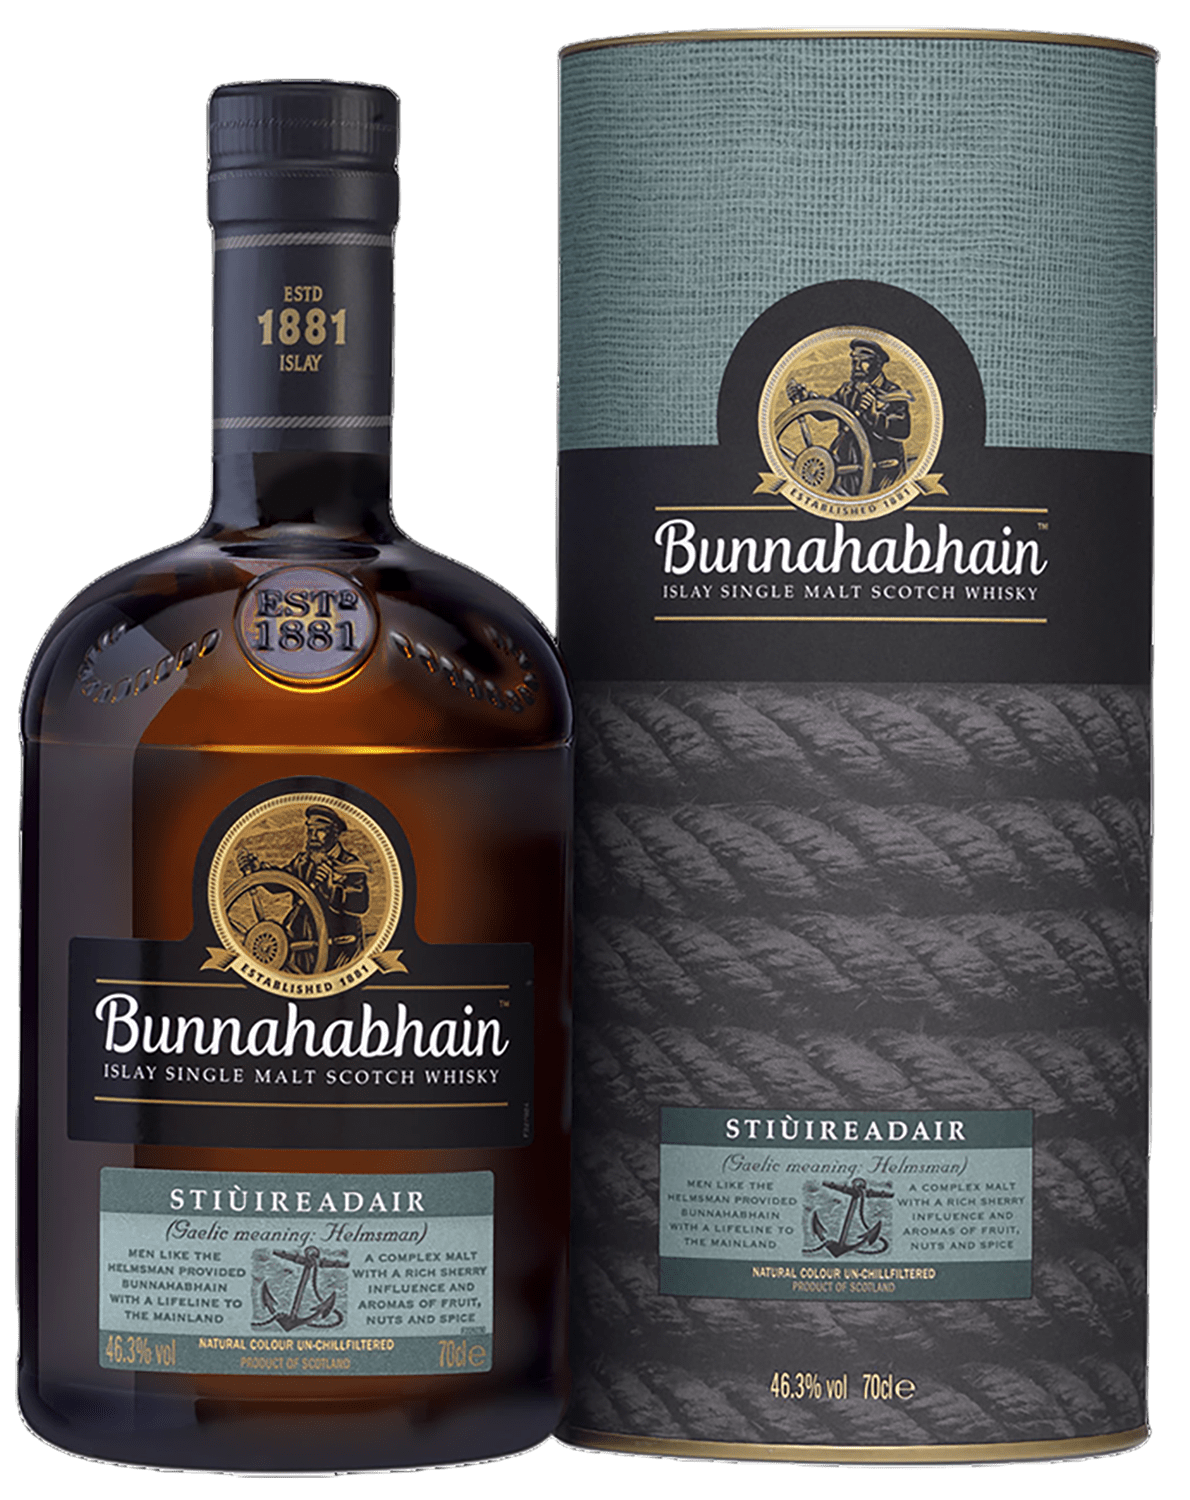 Bunnahabhain Stiuireadair Islay Single Malt Scotch Whisky (gift box) bruichladdich islay barley single malt scotch whisky gift box